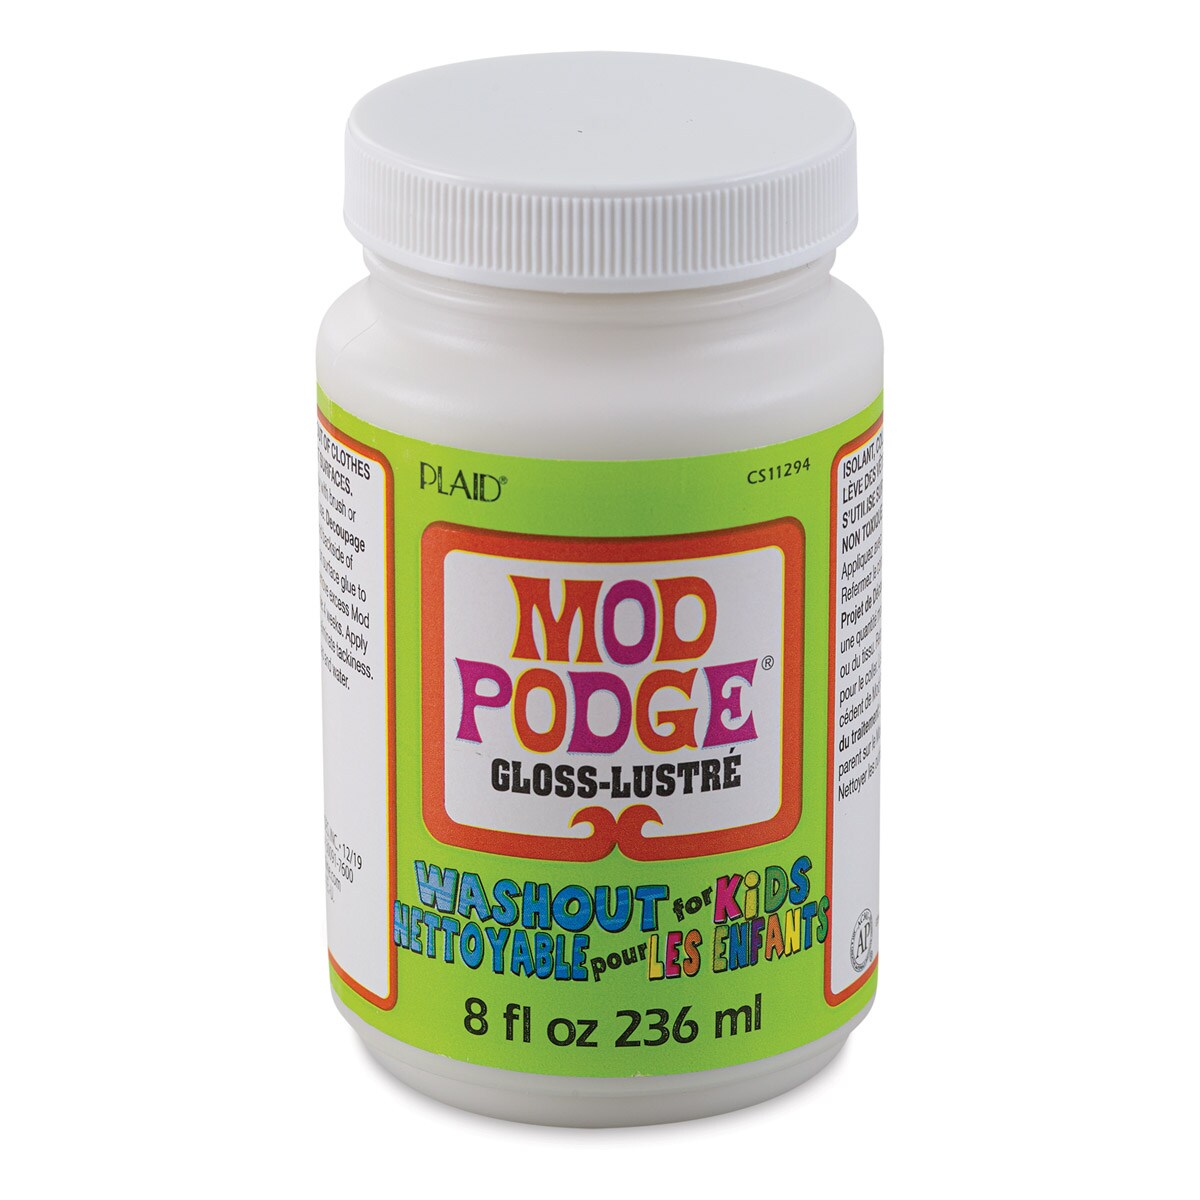 Plaid Mod Podge Wash Out for Kids - Gloss Finish, 8 oz jar